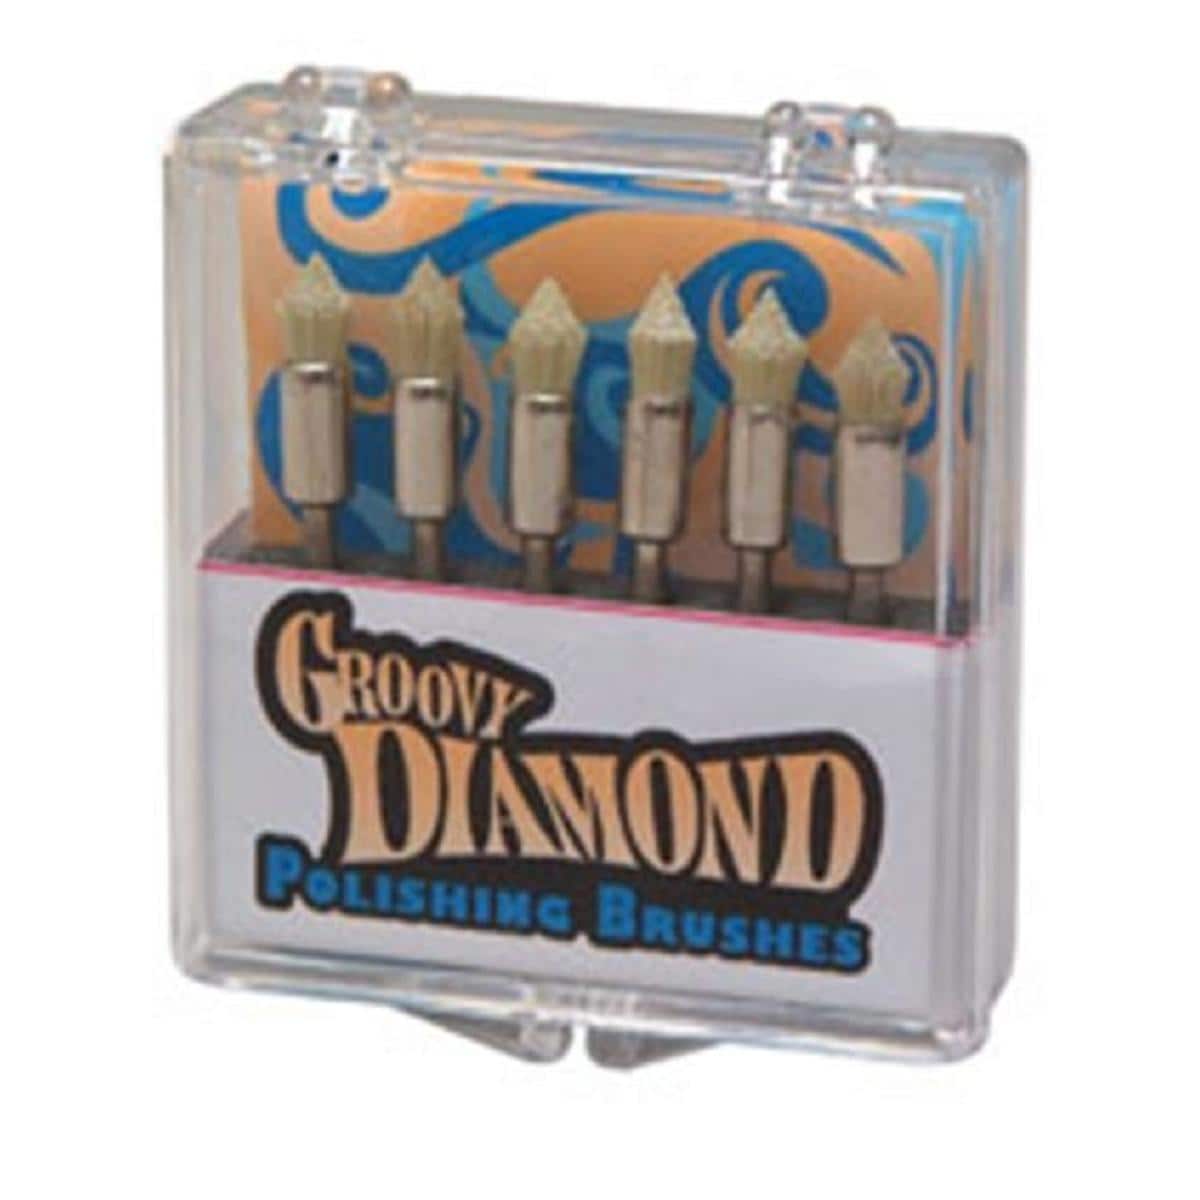 Groovy Diamond - recharge - Occlusal, 6 pcs